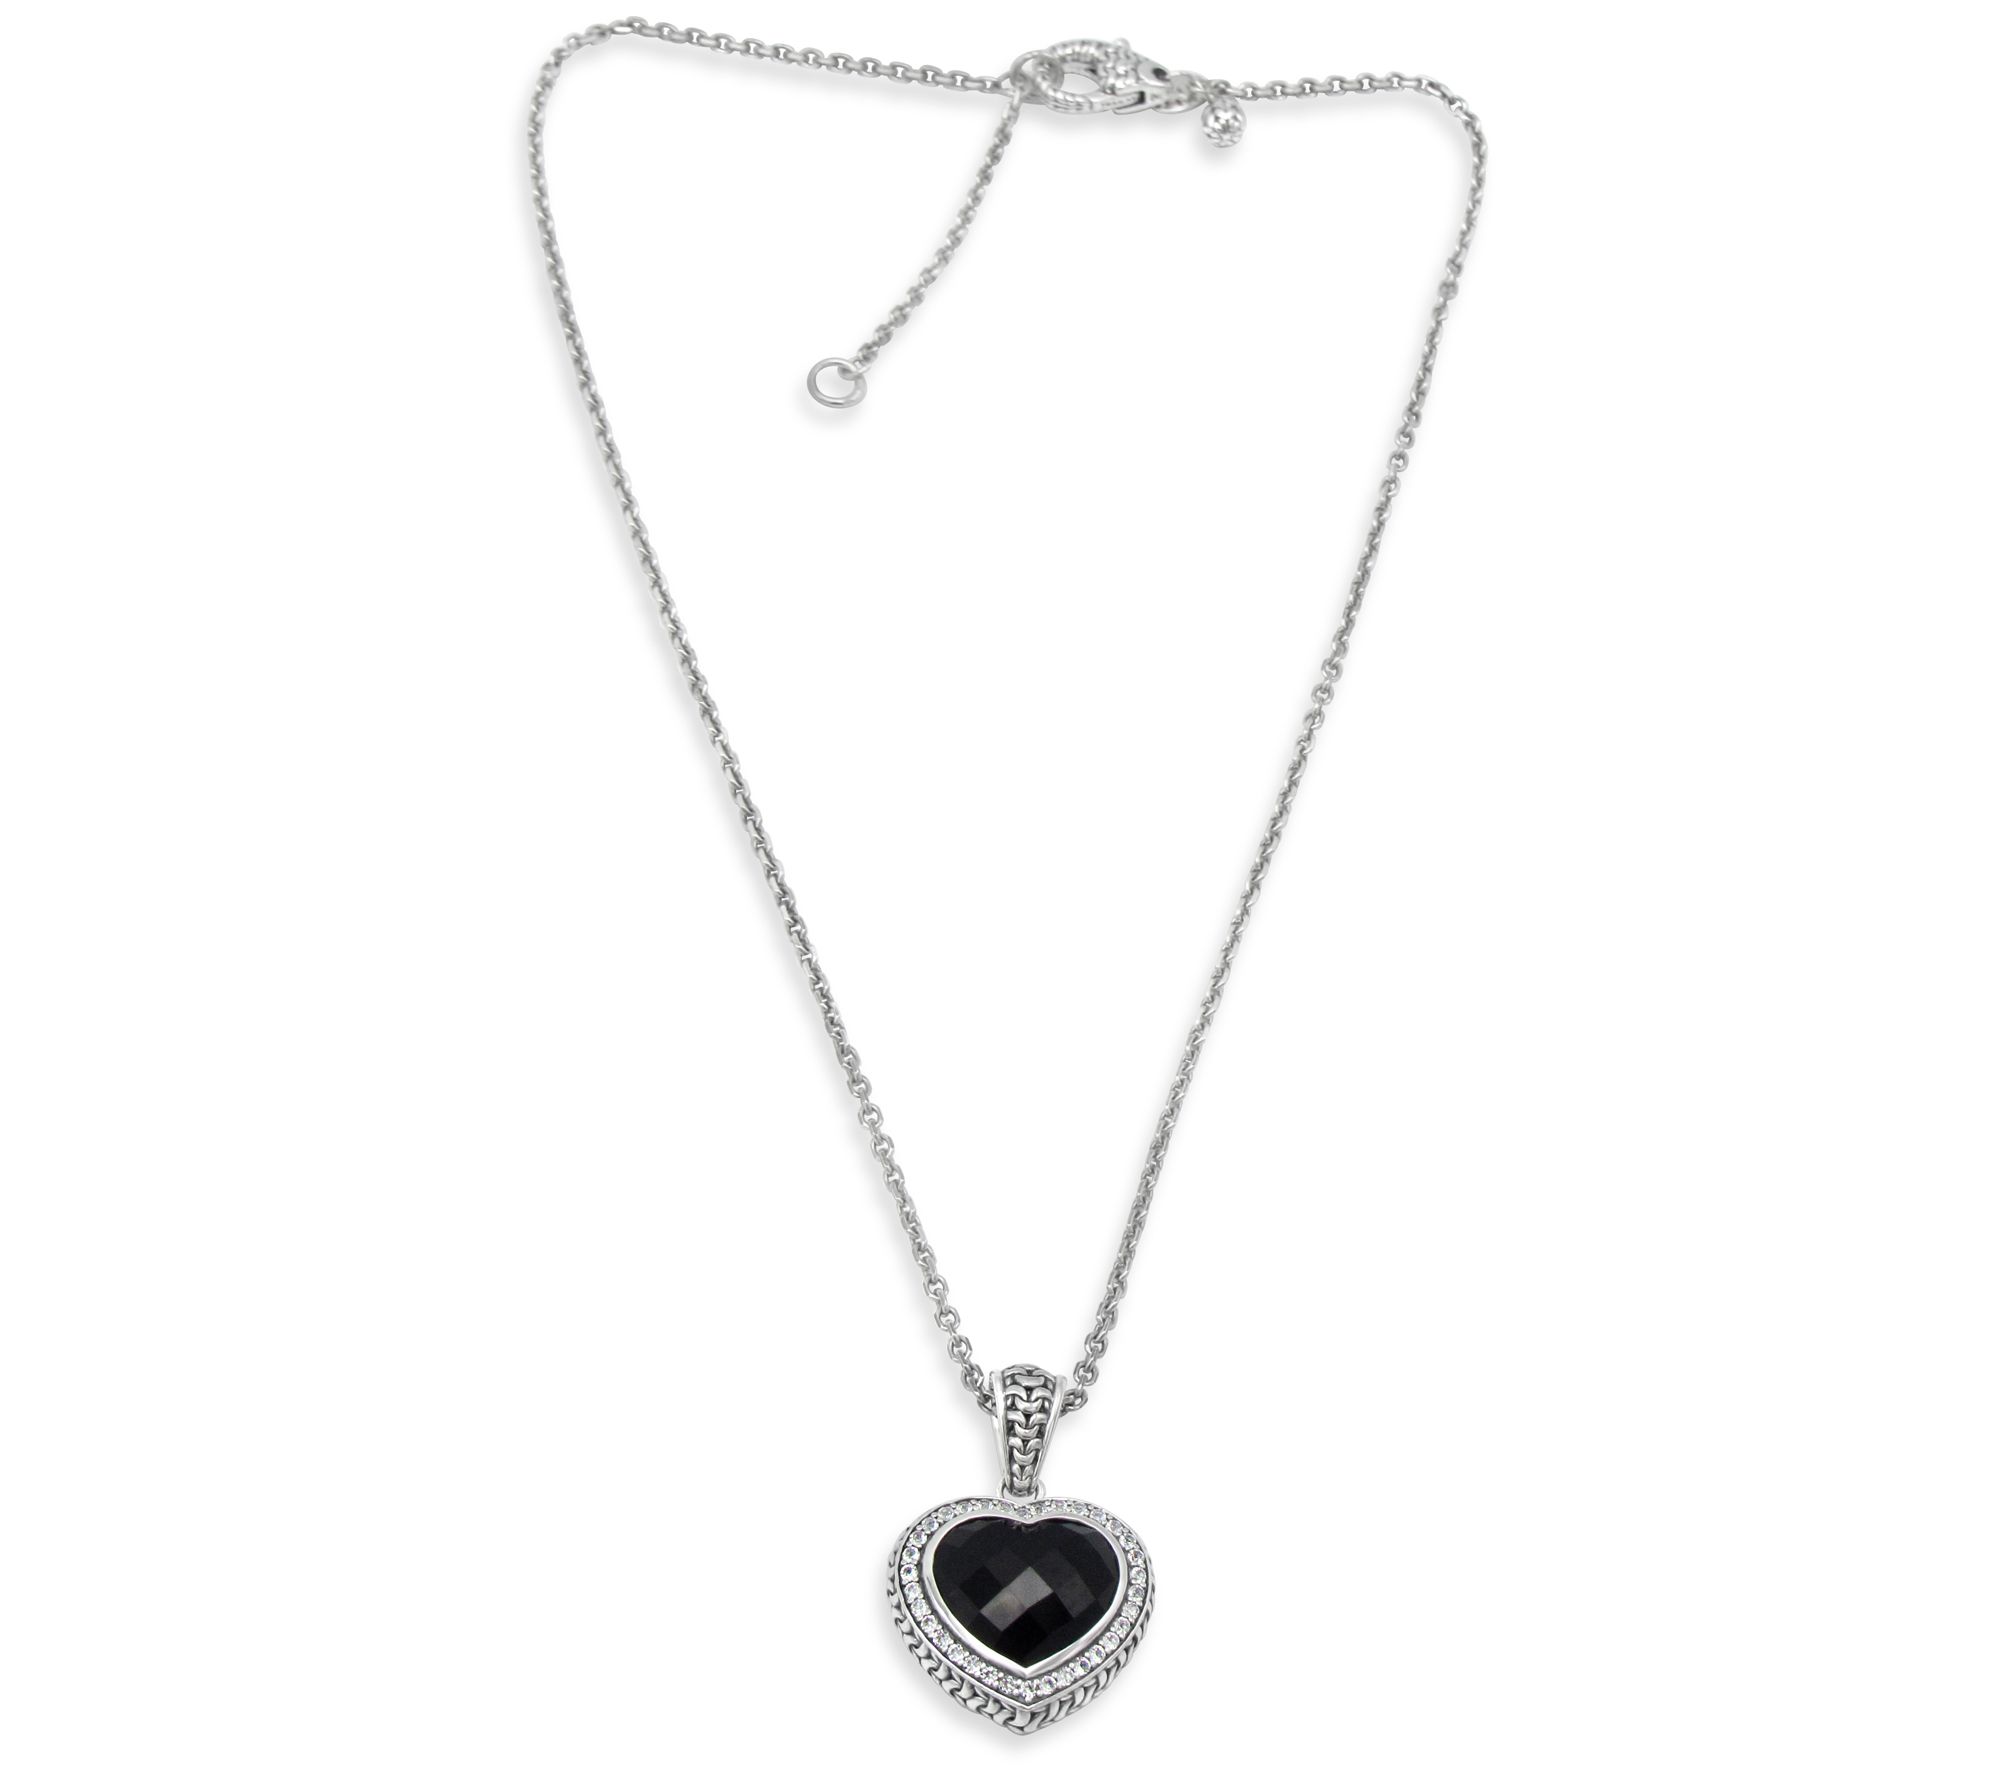 Tiffany Kay Studio Black Onyx Heart Pendant with Chain - QVC.com